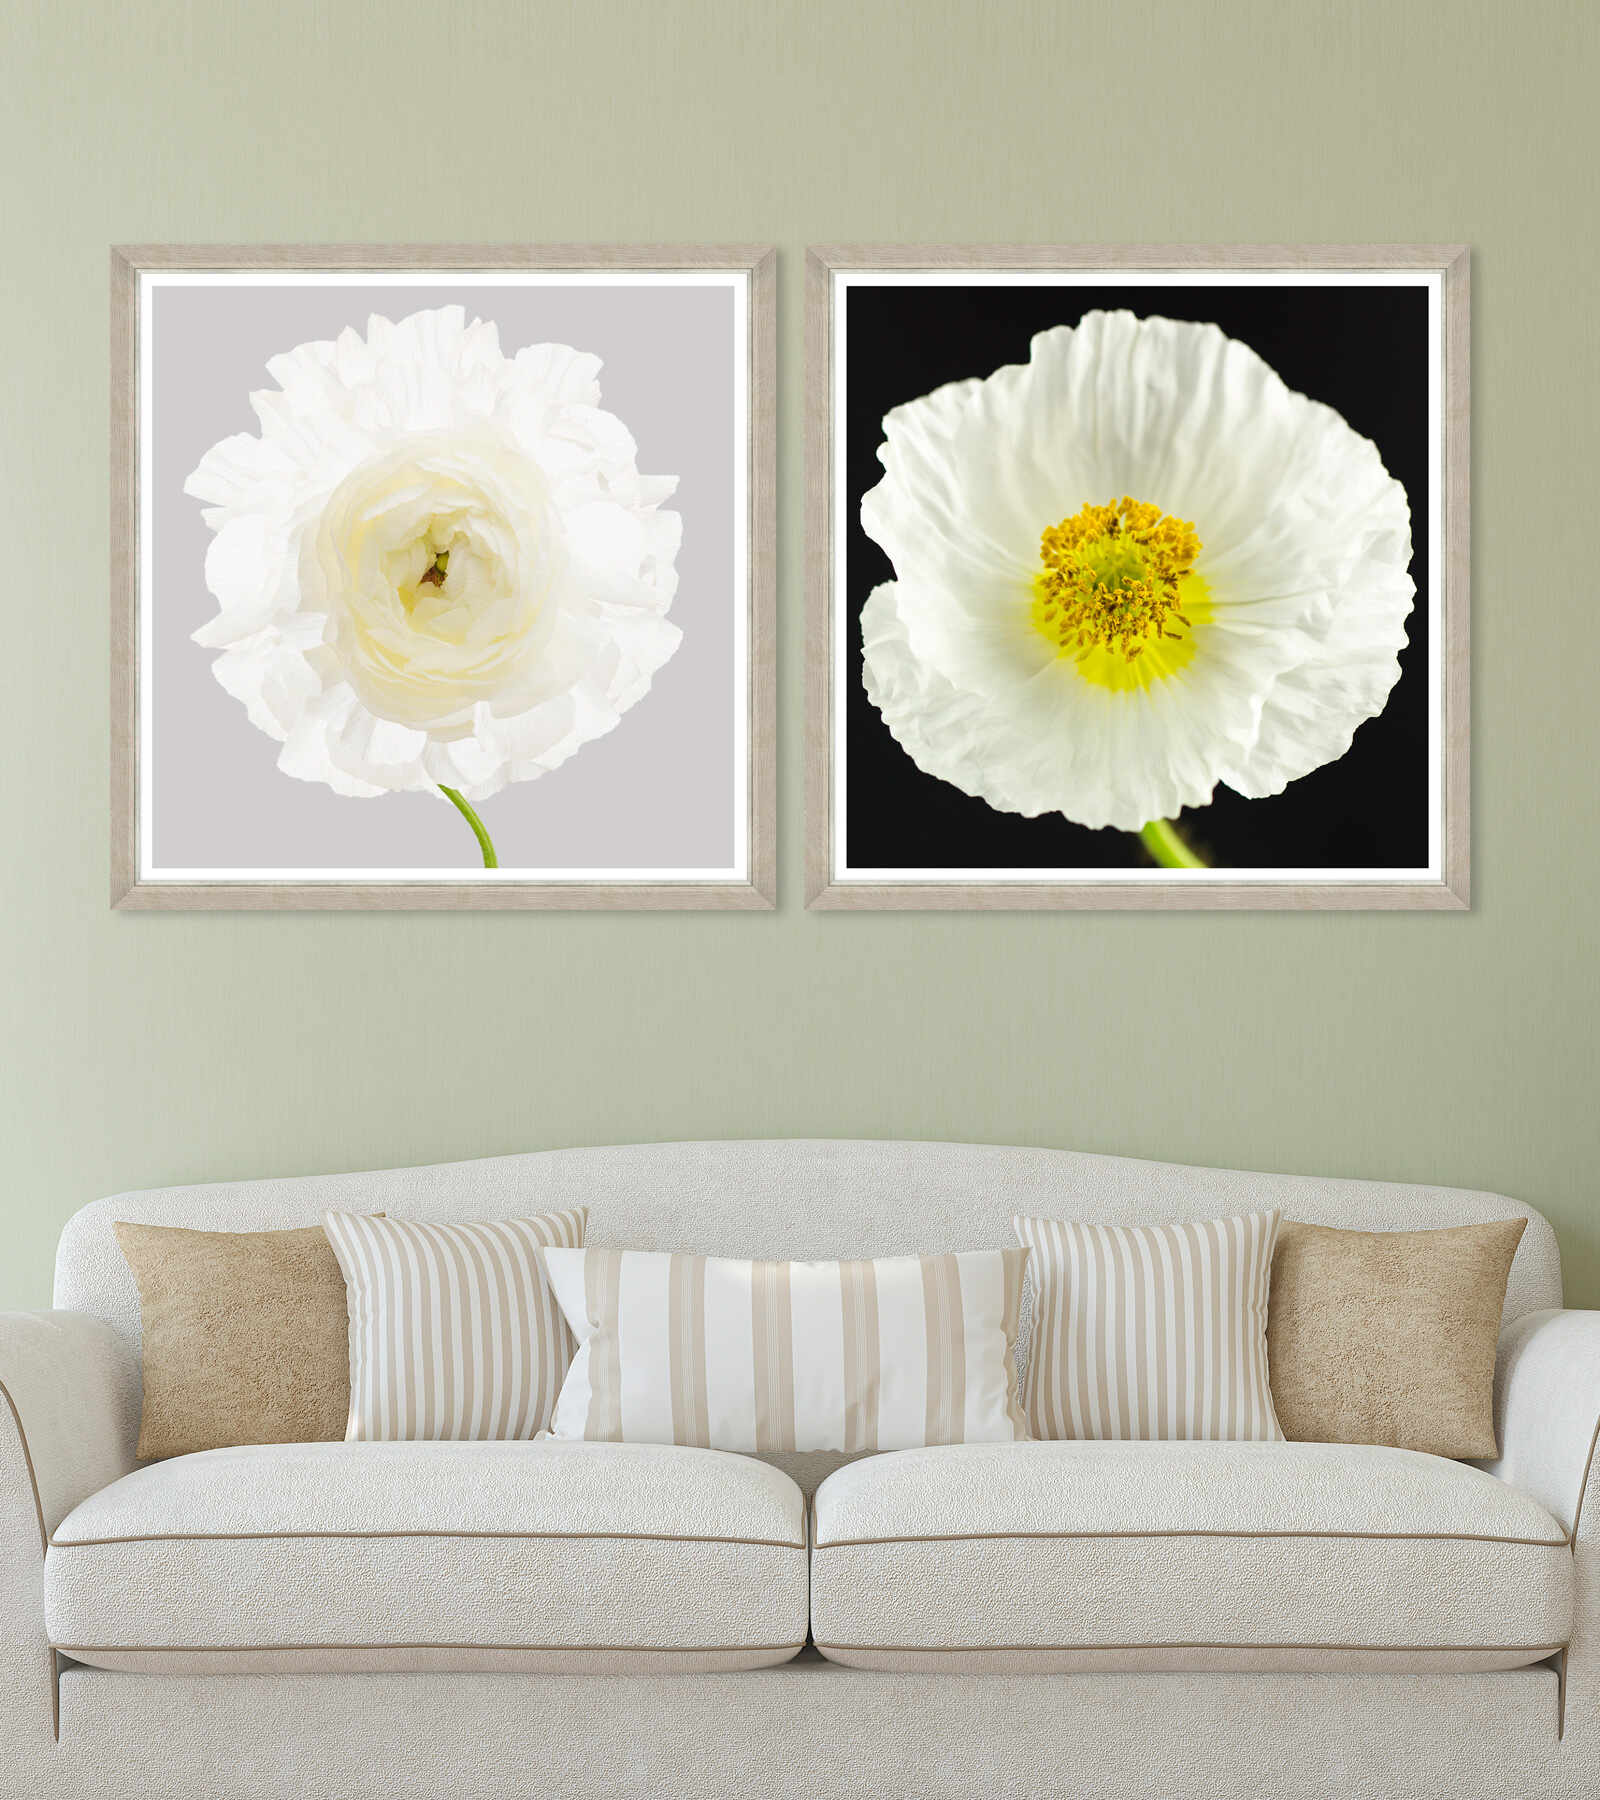 Tablou 2 piese Framed Art Poppy & Ranunculus